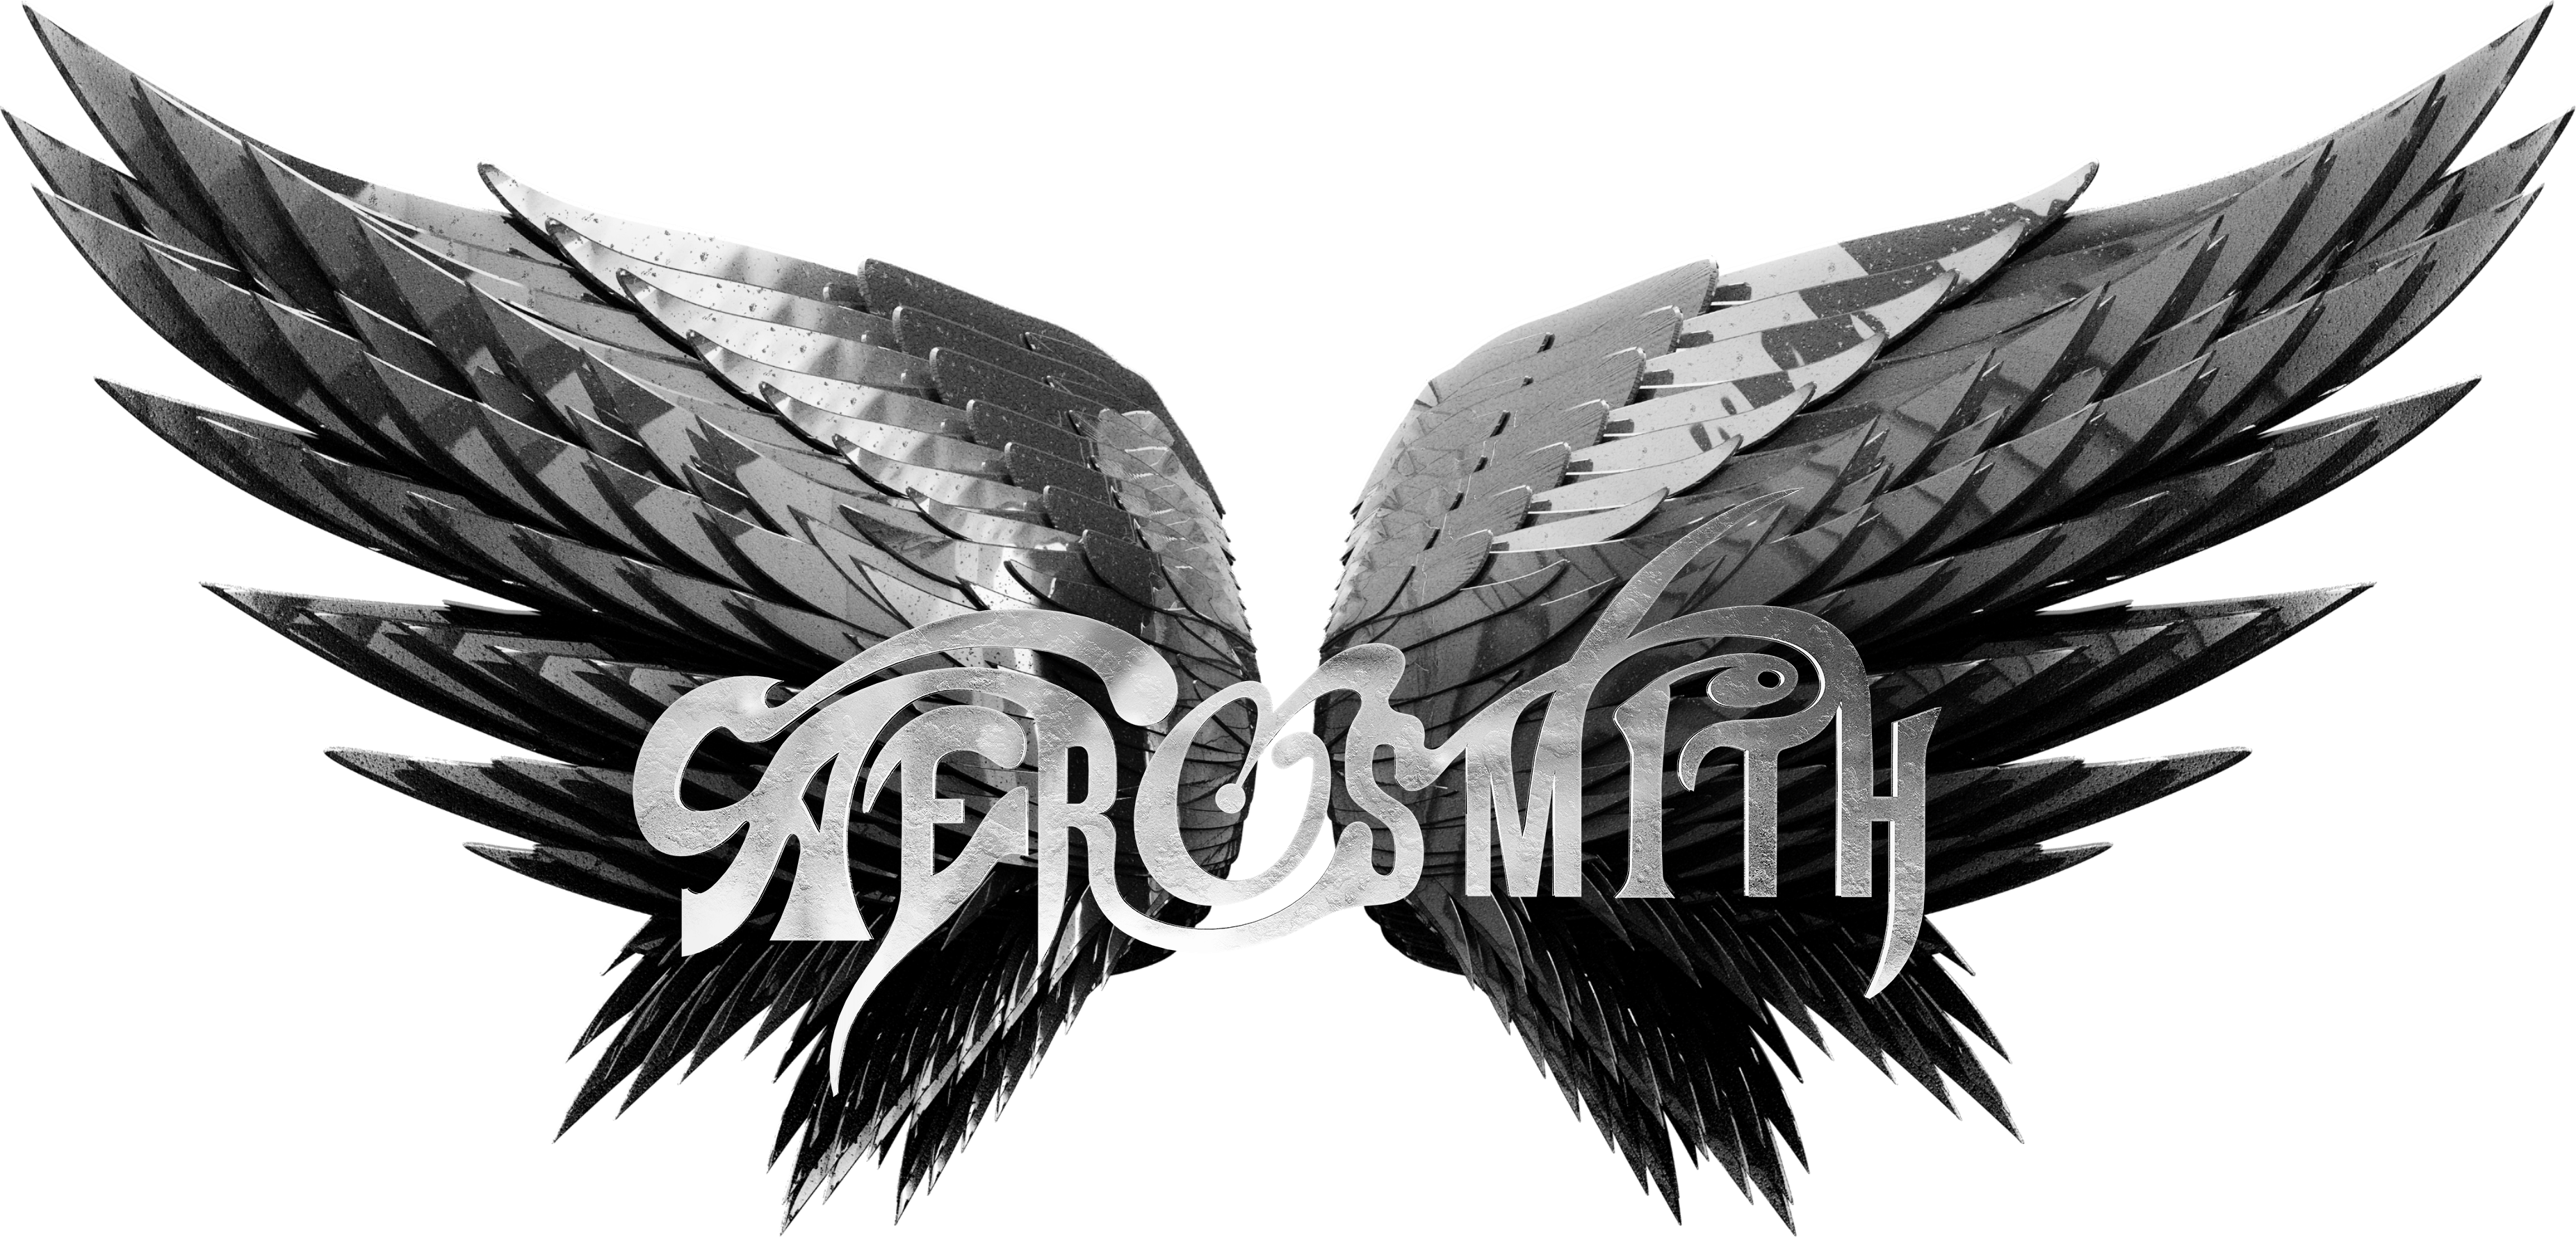 Aerosmith Original Logo - Aerosmith Official Online store | Aerosmith Official Store